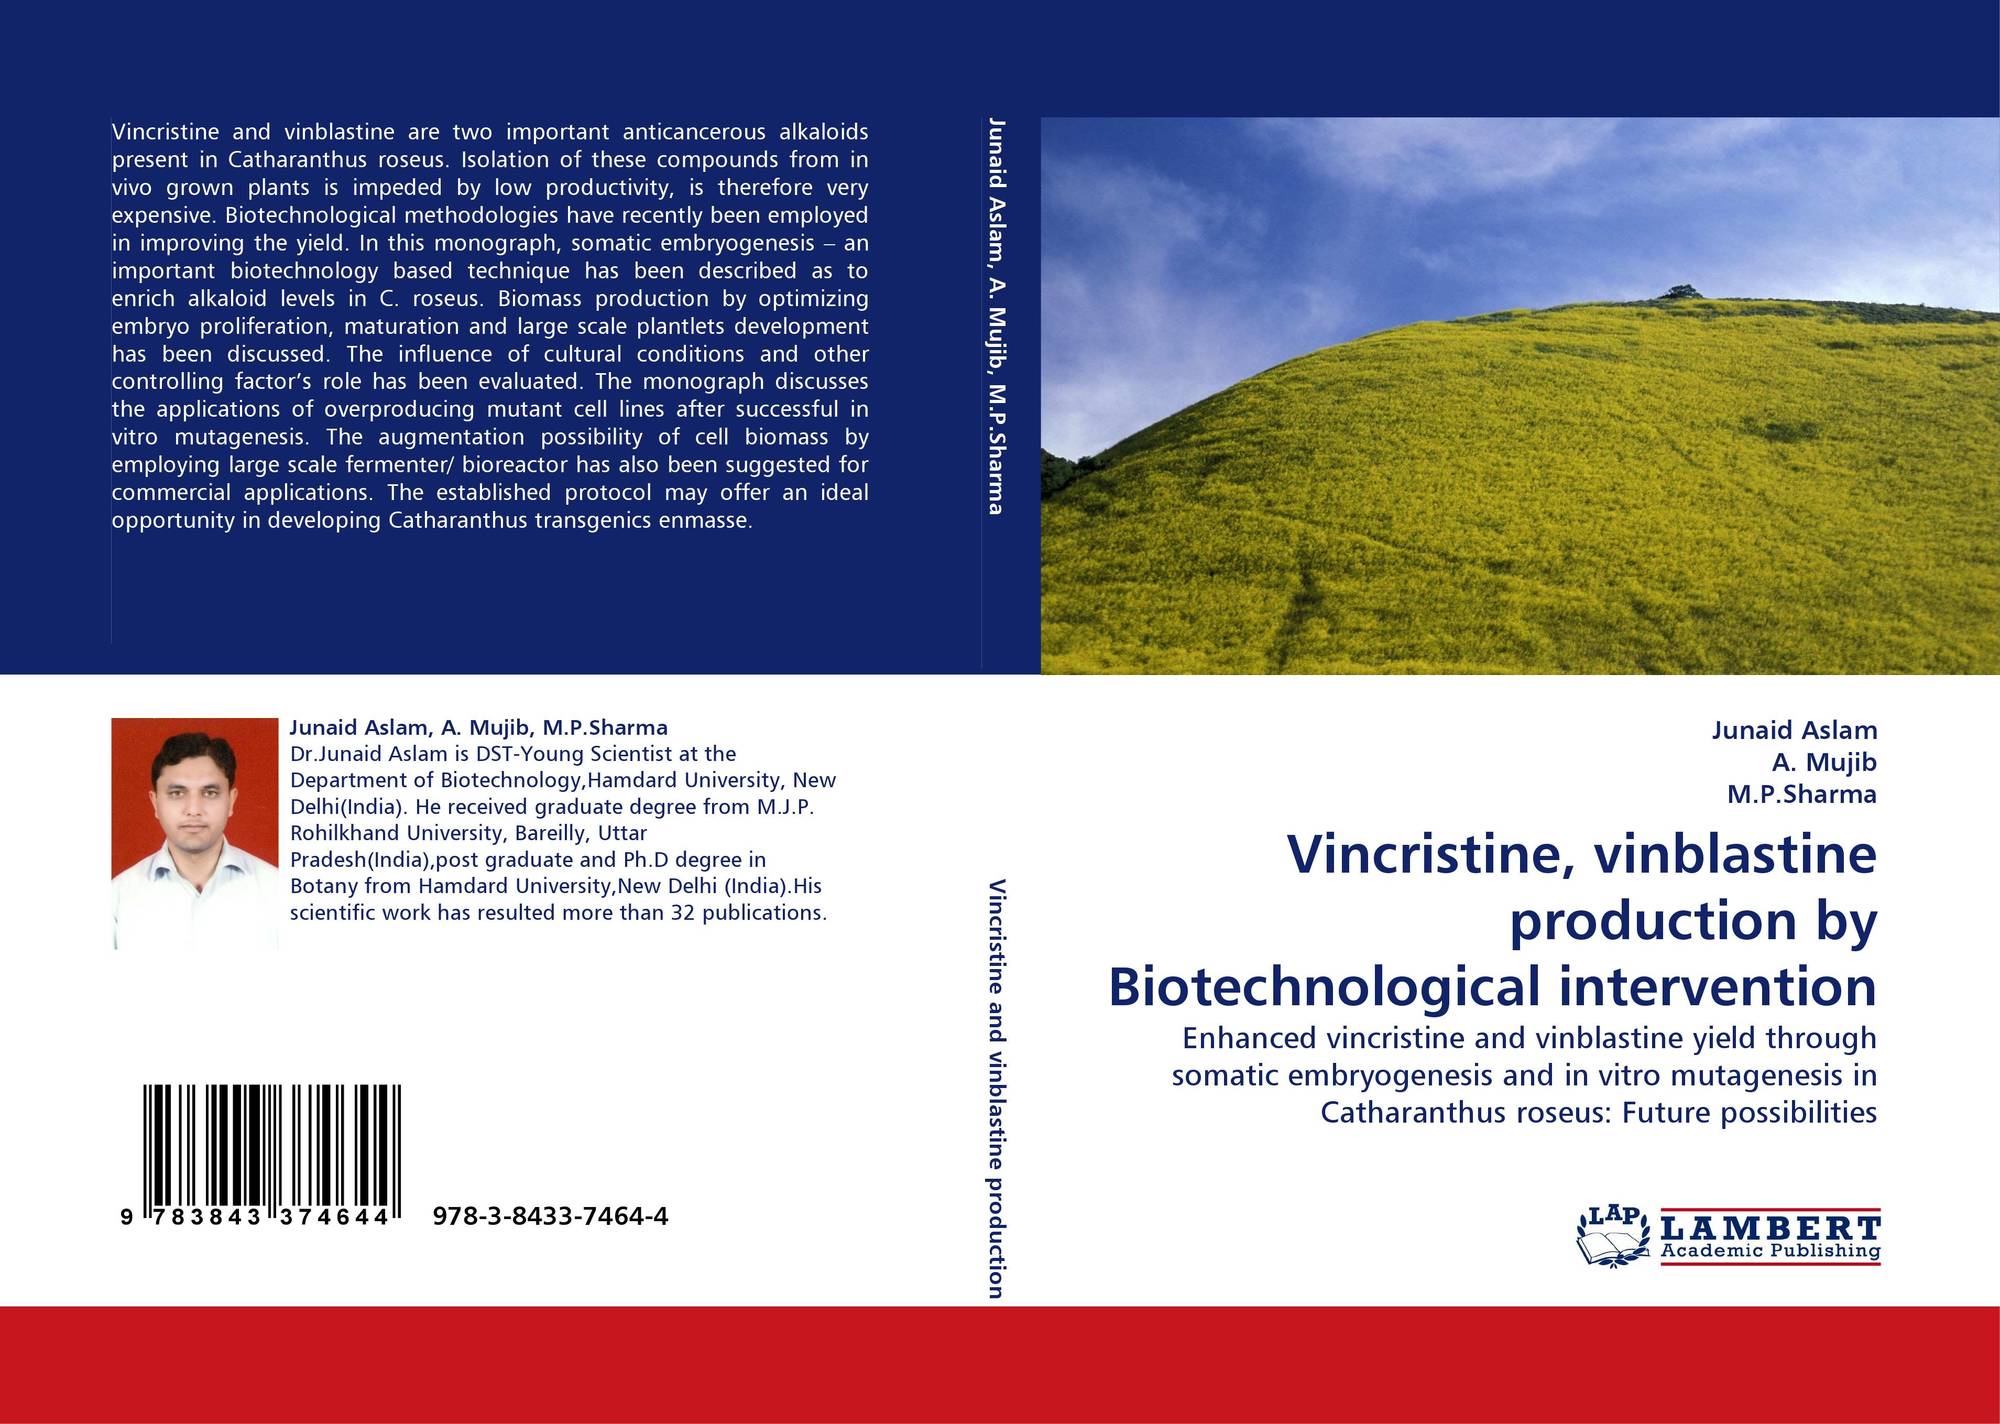 Vincristine, vinblastine production by Biotechnological intervention